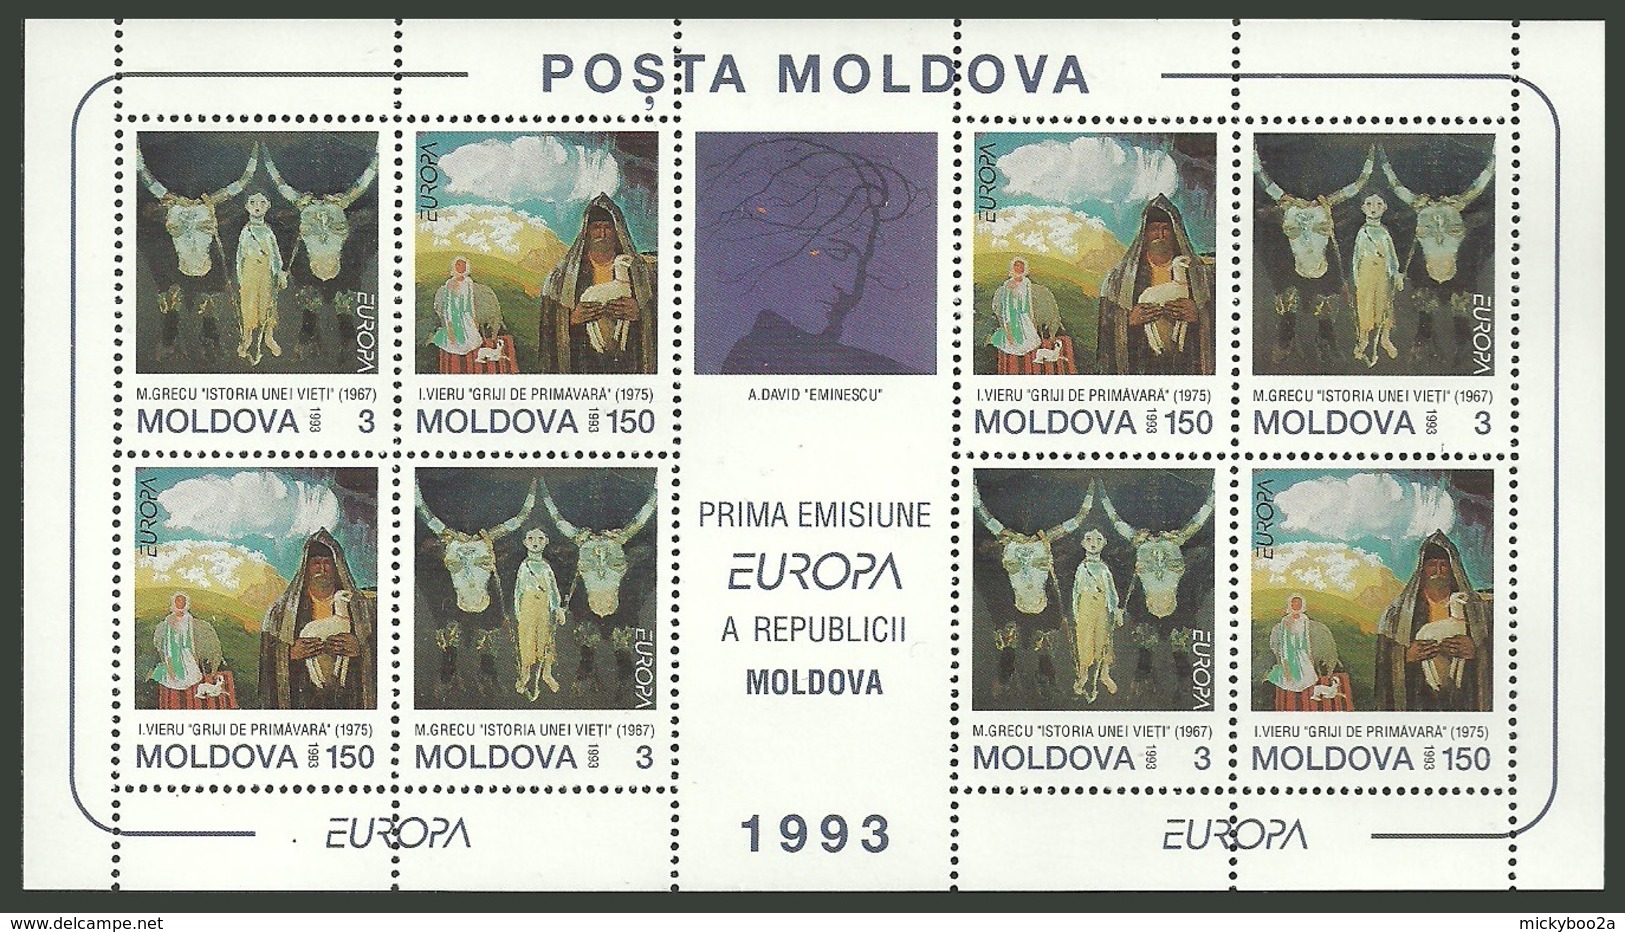 MOLDOVA 1993 EUROPA ART PAINTINGS SHEEP CATTLE M/SHEET MNH - Moldova